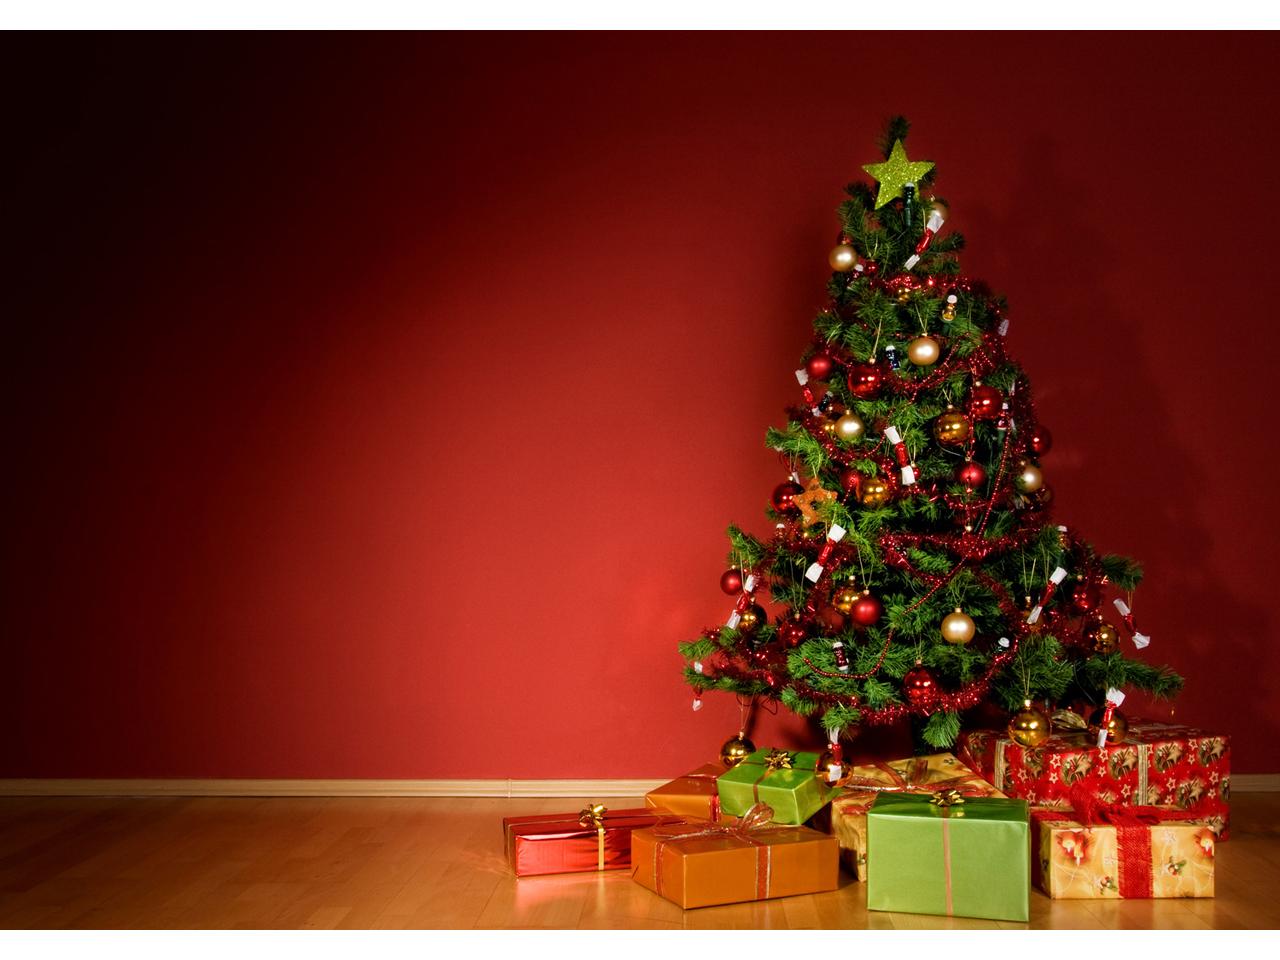 обои New Year,   украшенная елка и подарки фото